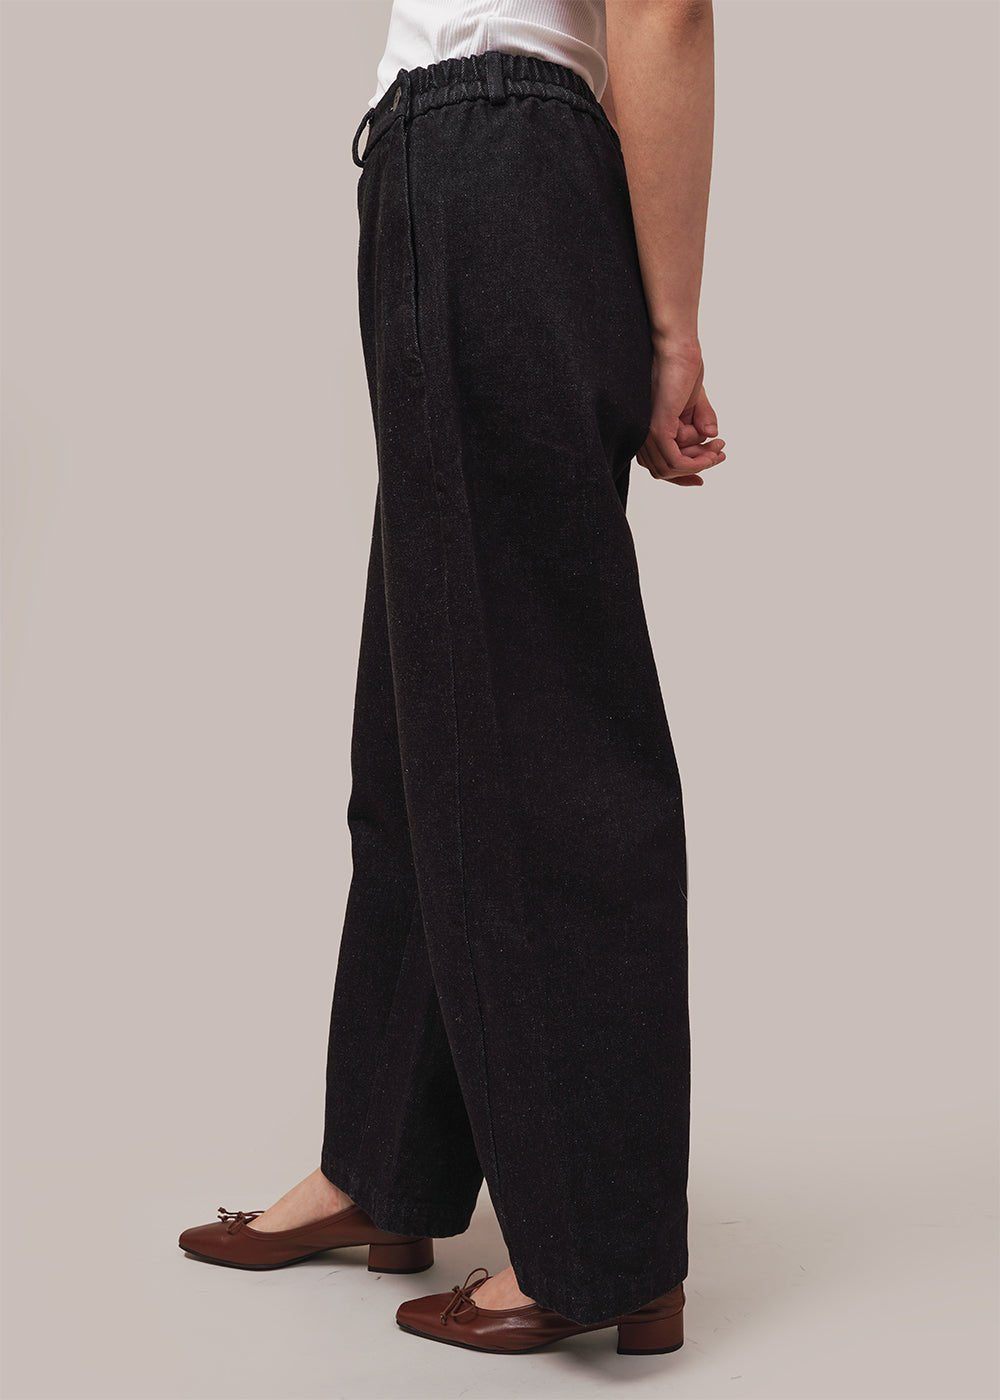 Cordera Black Denim Twist Pants - New Classics Studios Sustainable Ethical Fashion Canada